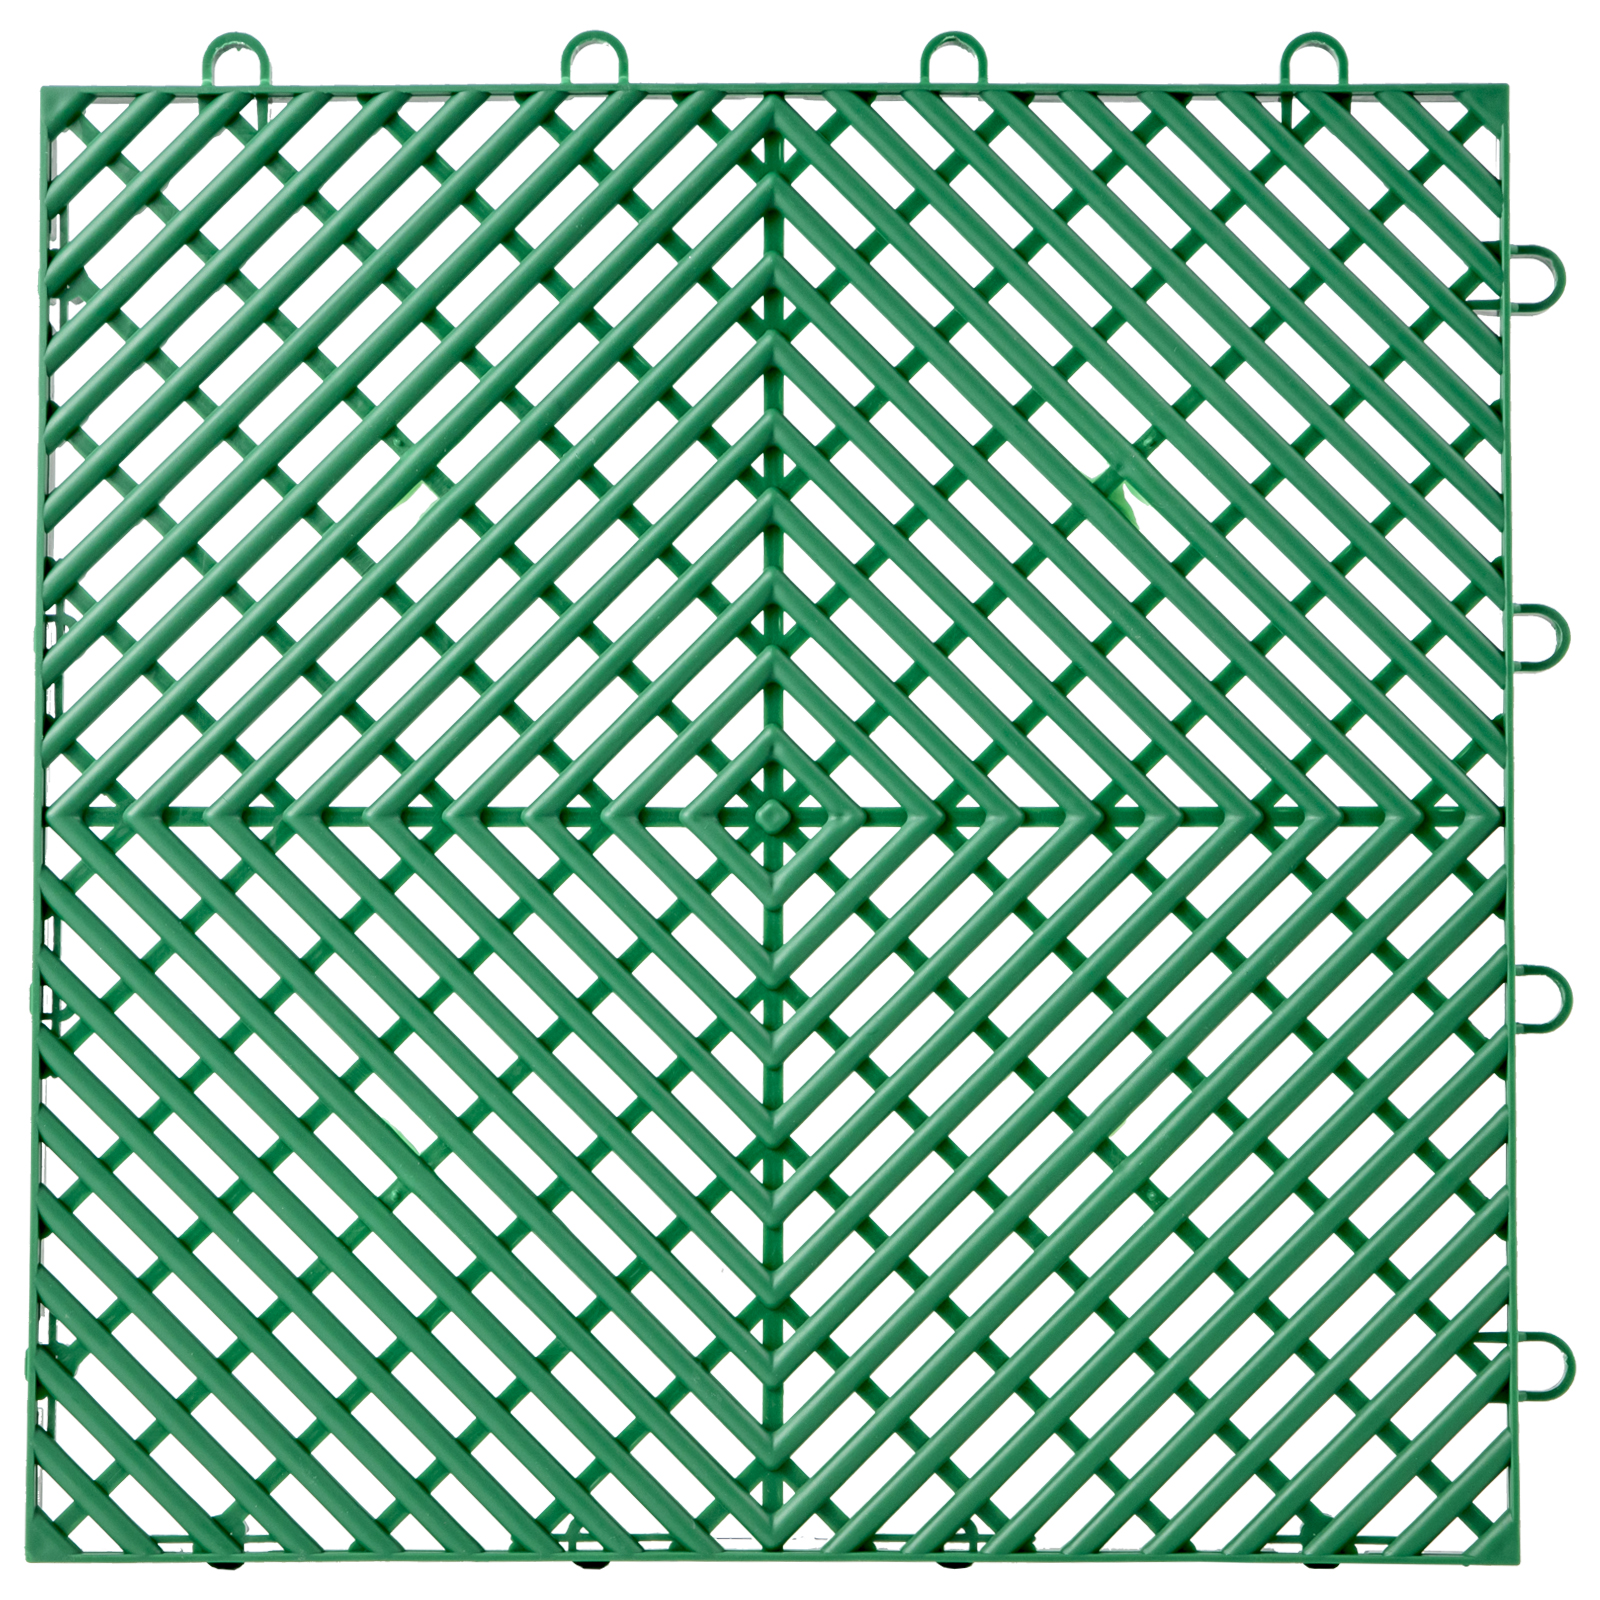 VEVOR Tiles Interlocking 55 Pcs Green, Drainage Tiles 12x12x0.5 Inches, Deck Tiles Outdoor Floor tiles, Outdoor Interlocking Ti